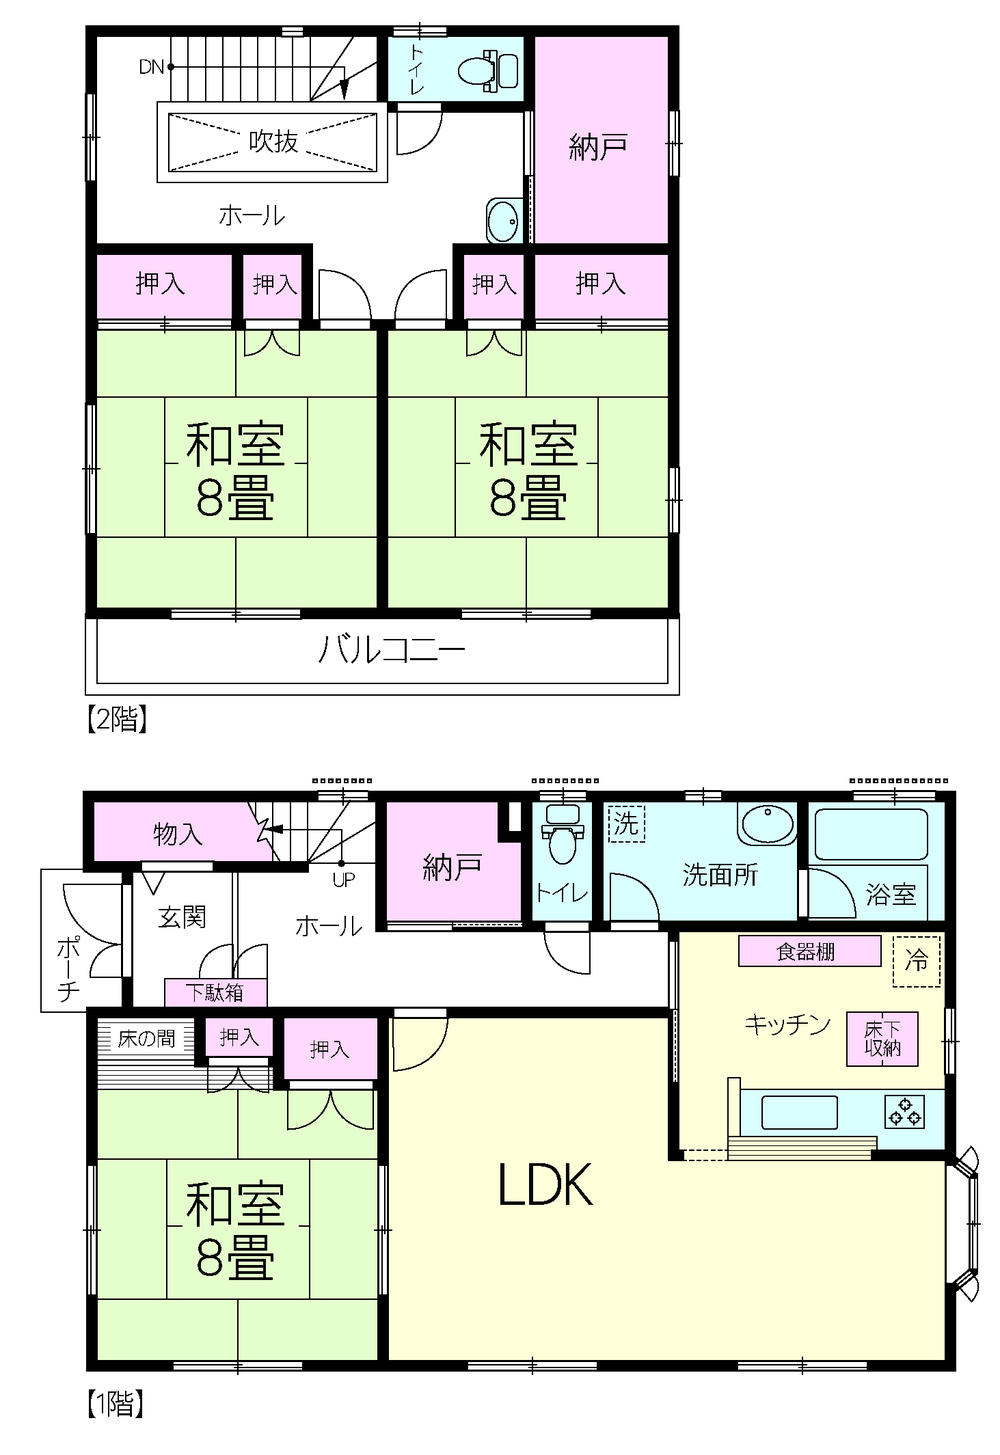 Floor plan. 13.5 million yen, 3LDK + 2S (storeroom), Land area 198.65 sq m , Building area 132 sq m